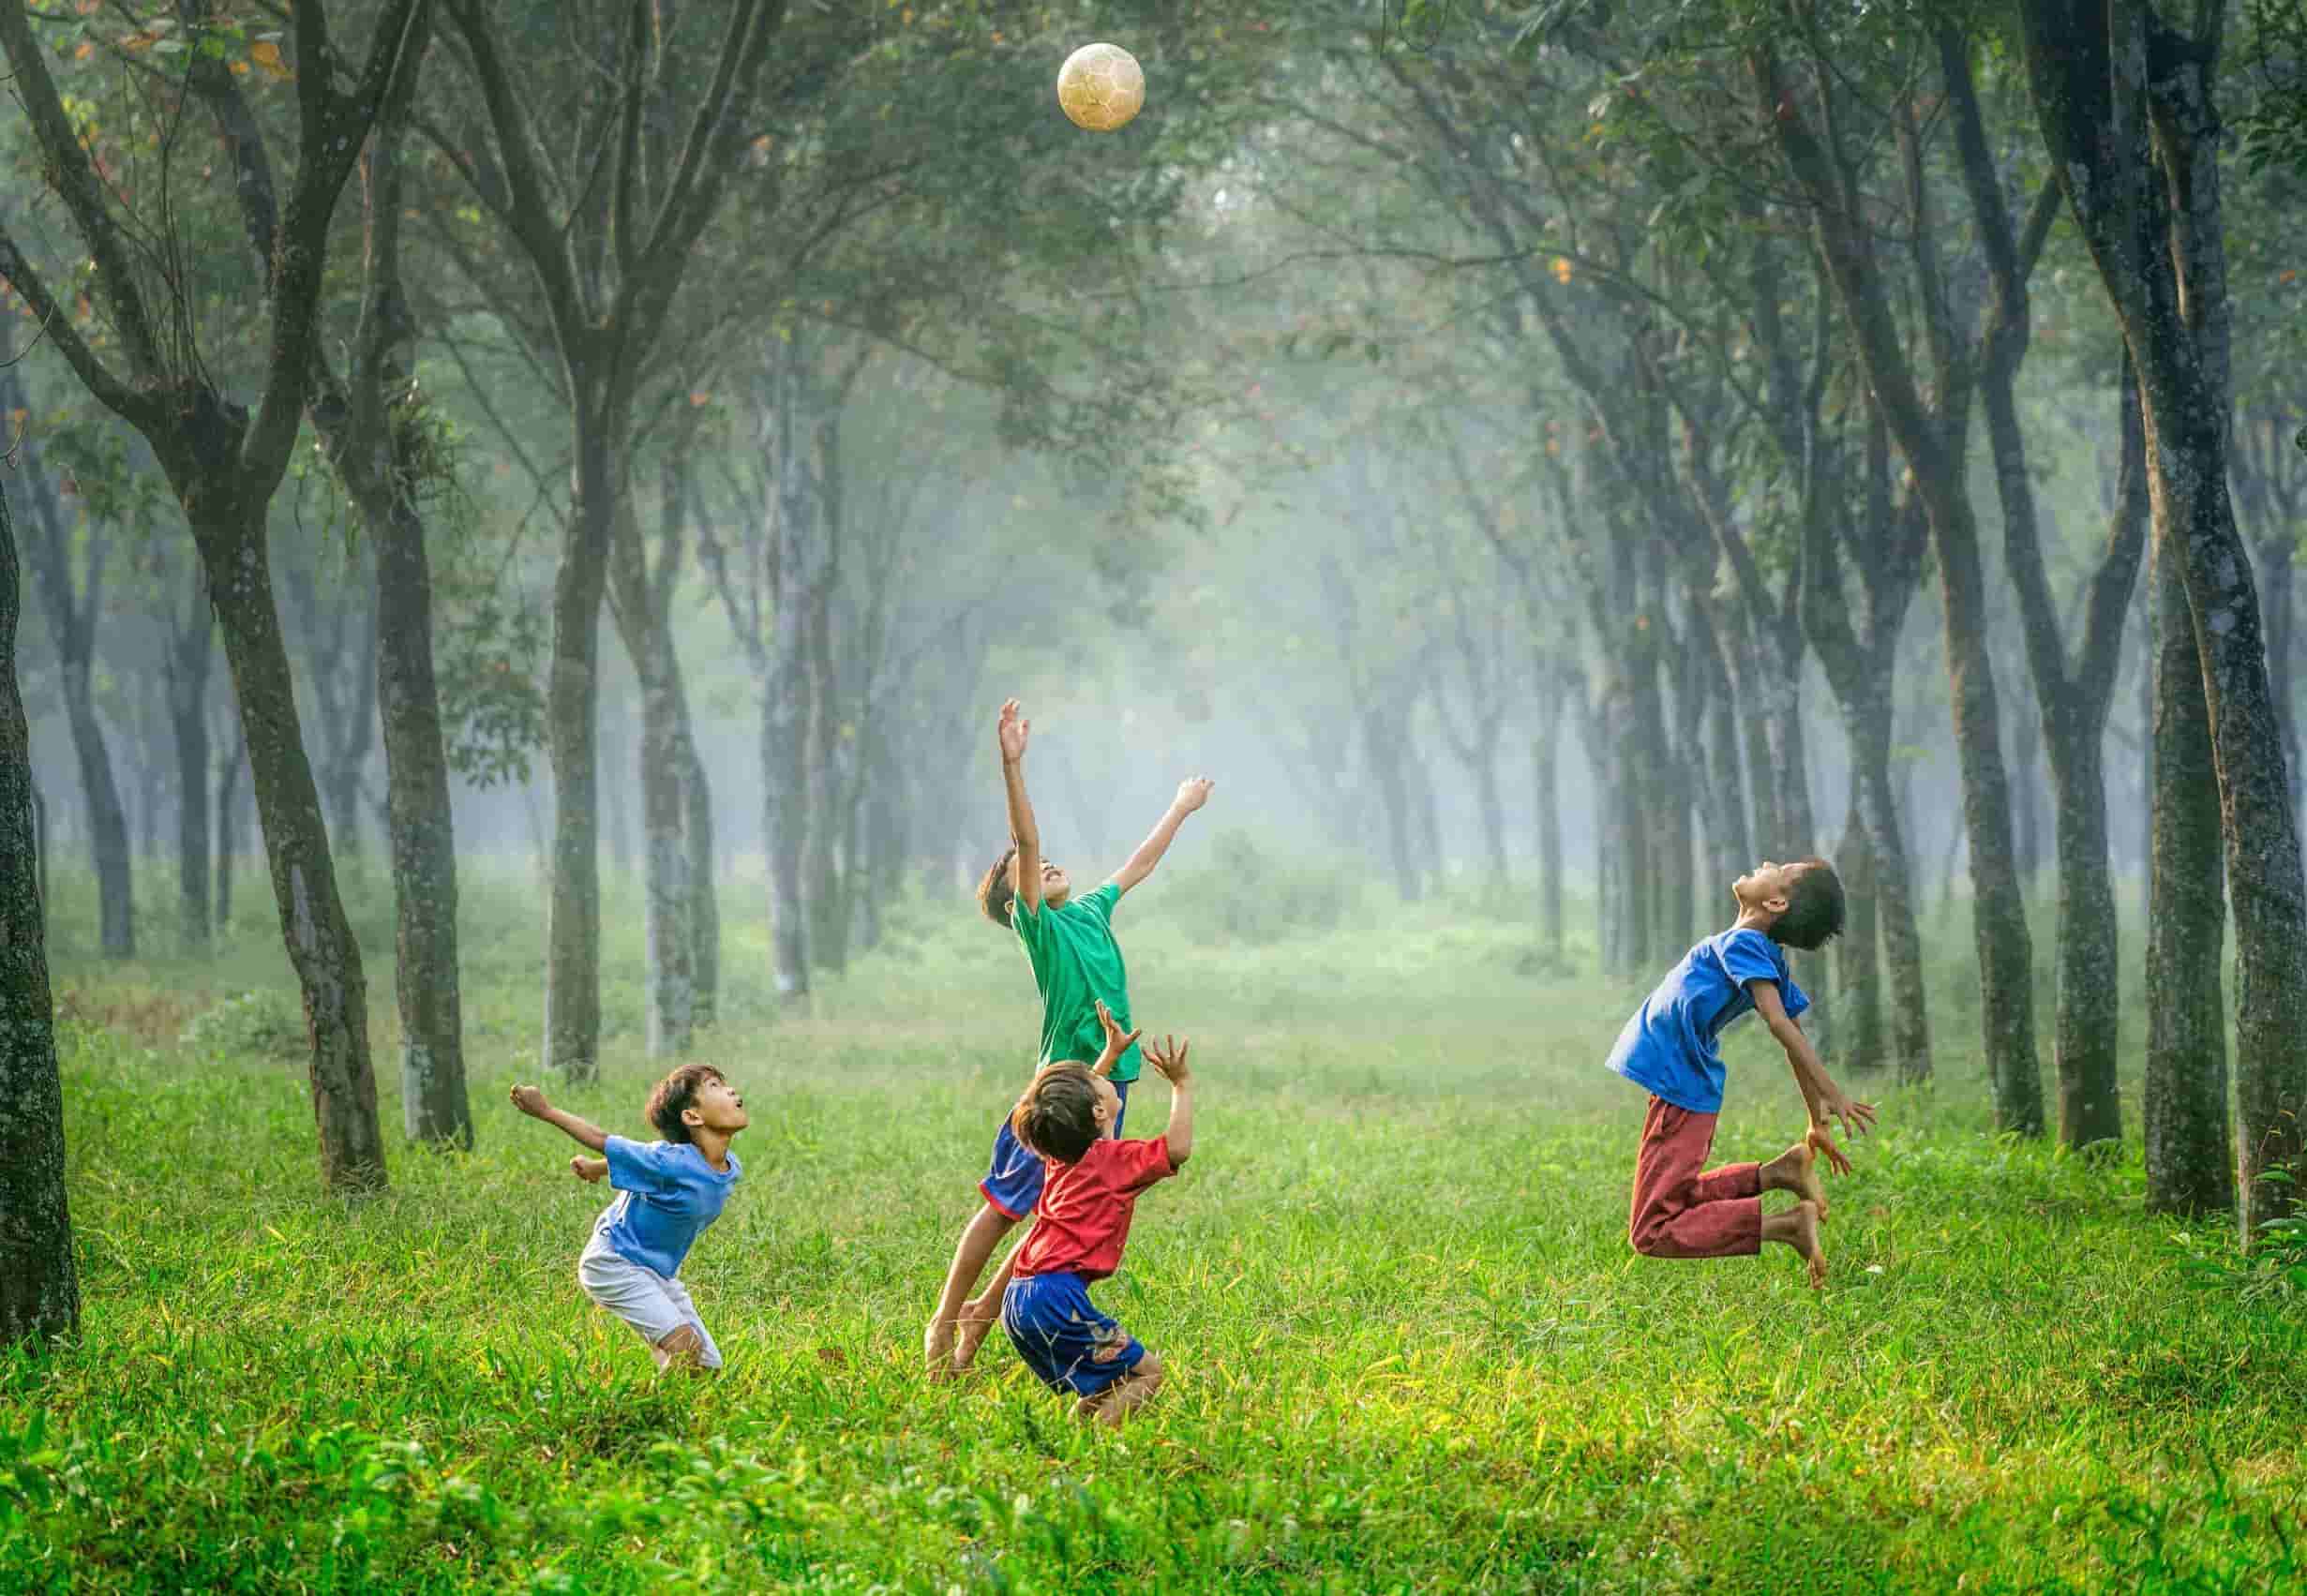 Four children jump in the air reaching for a ball